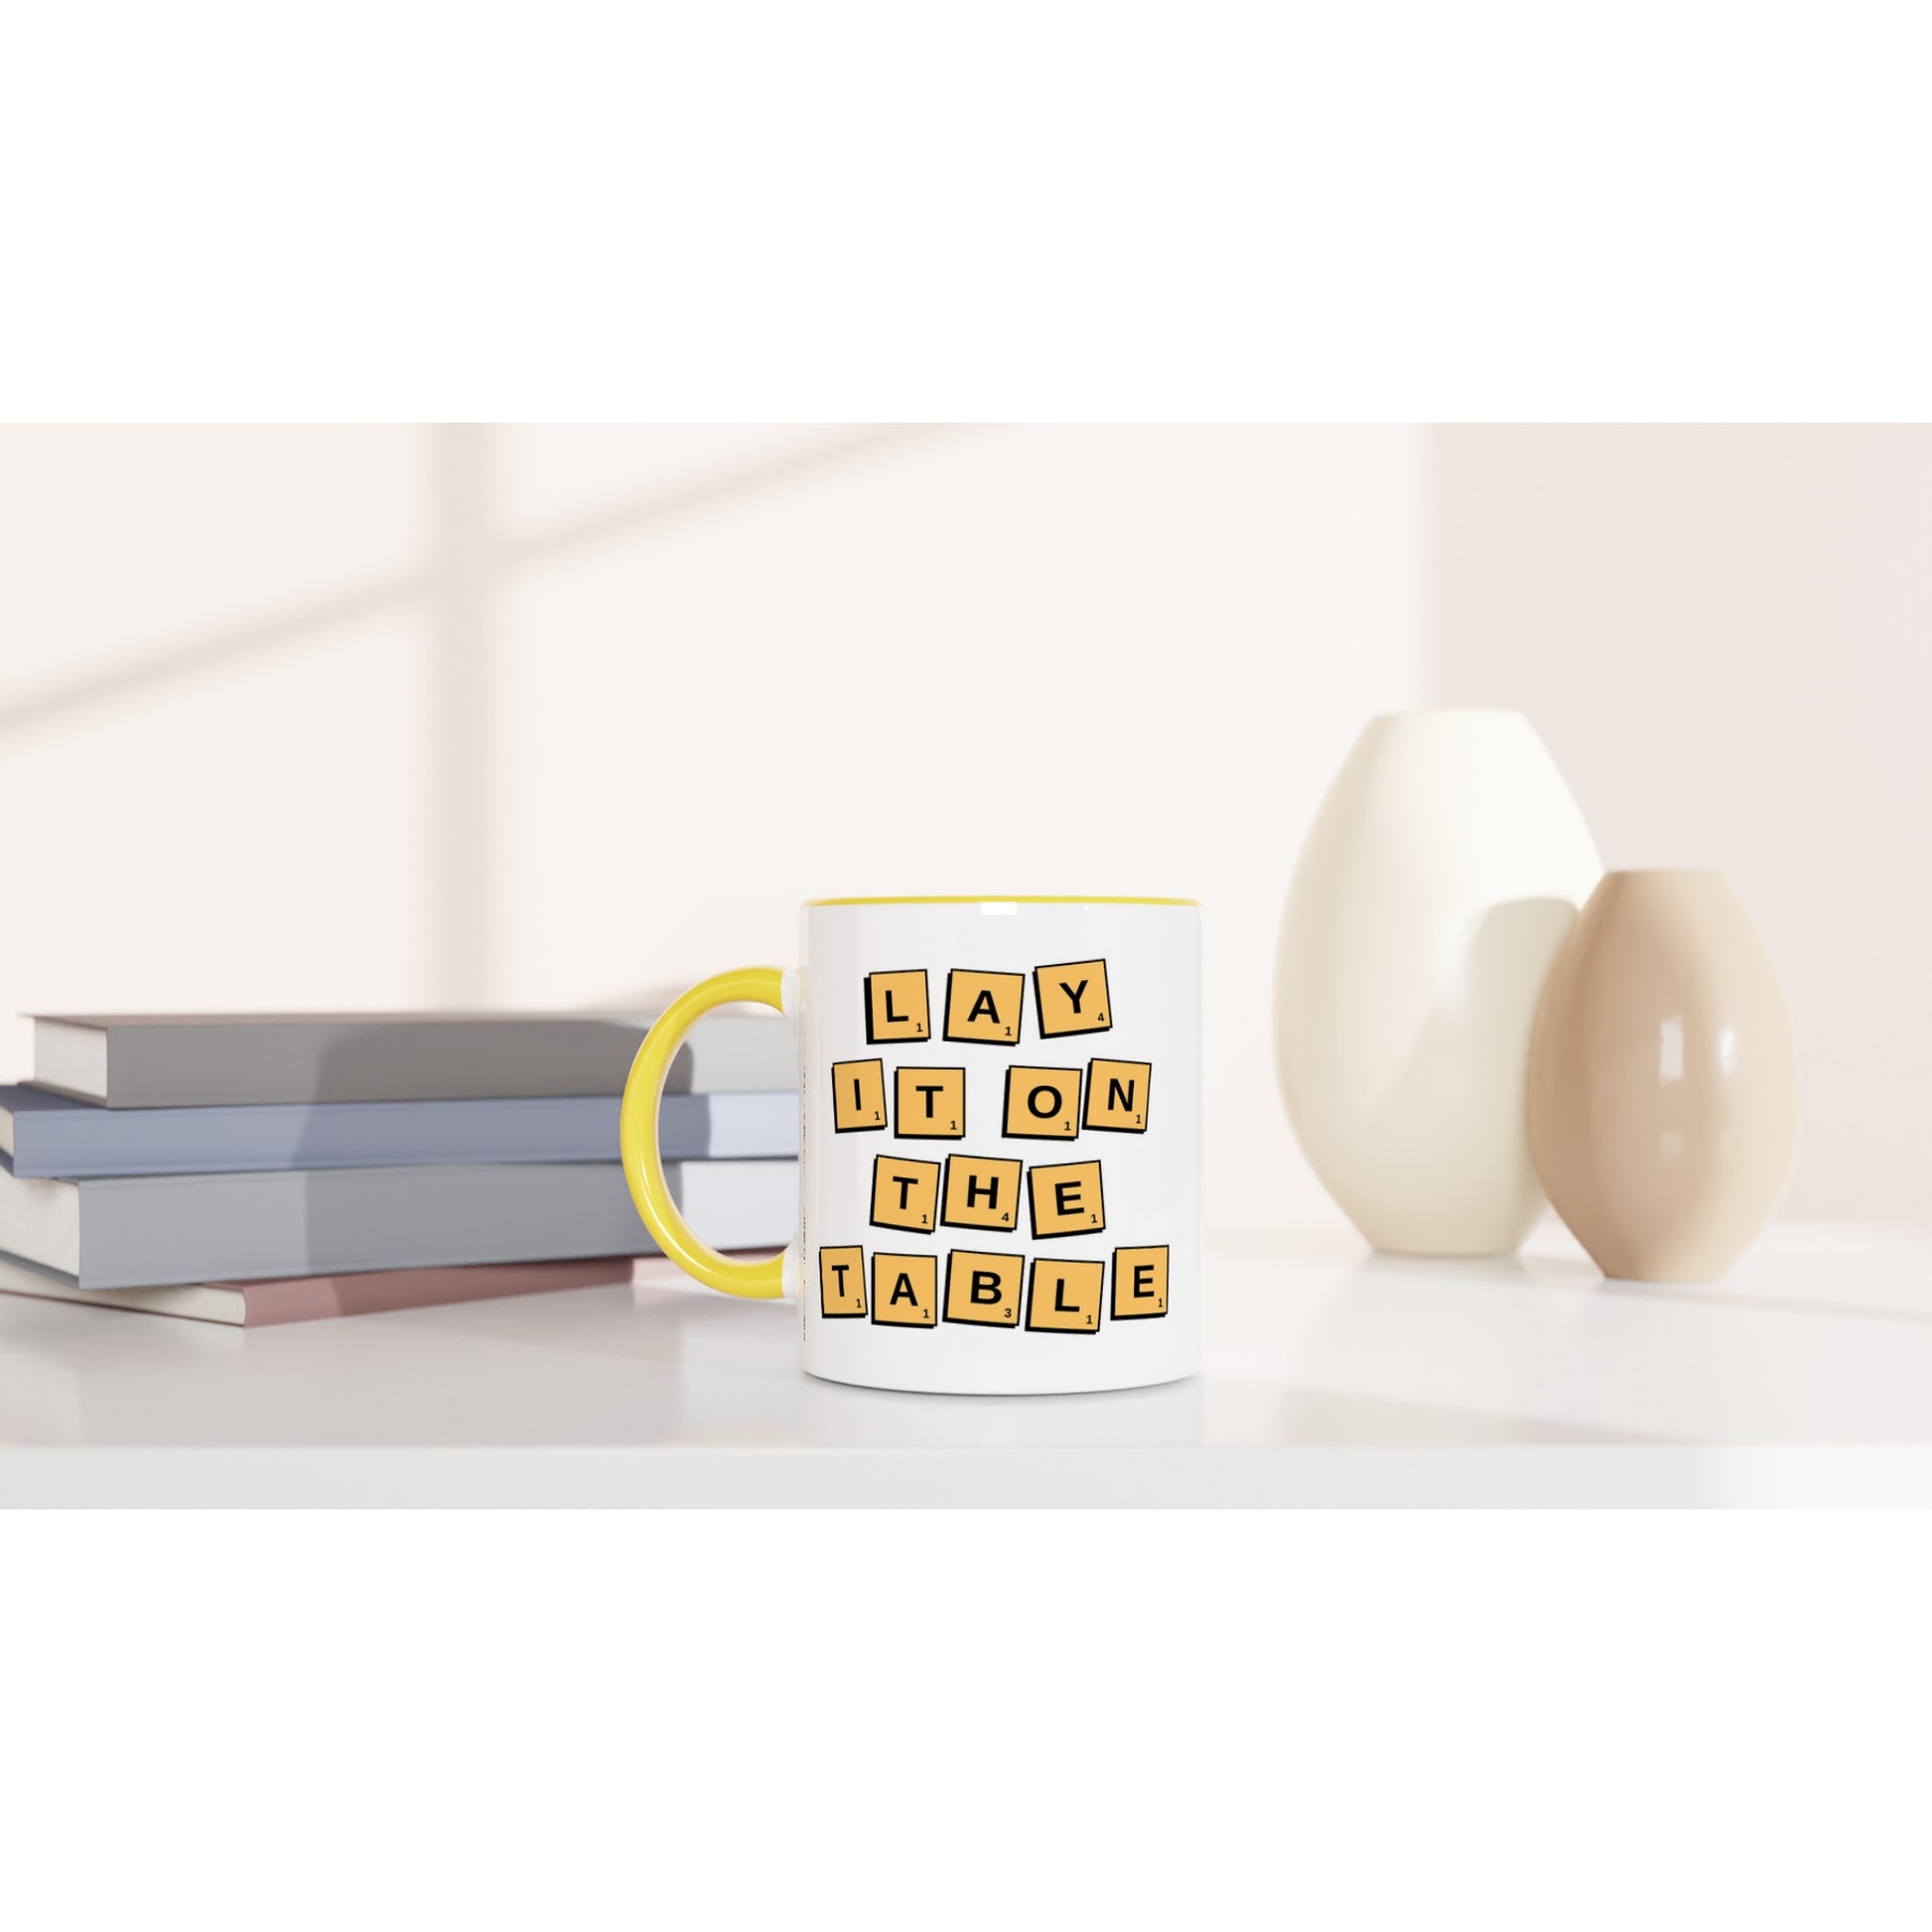 Lay It On The Table - White 11oz Ceramic Mug with Colour Inside Colour 11oz Mug Games